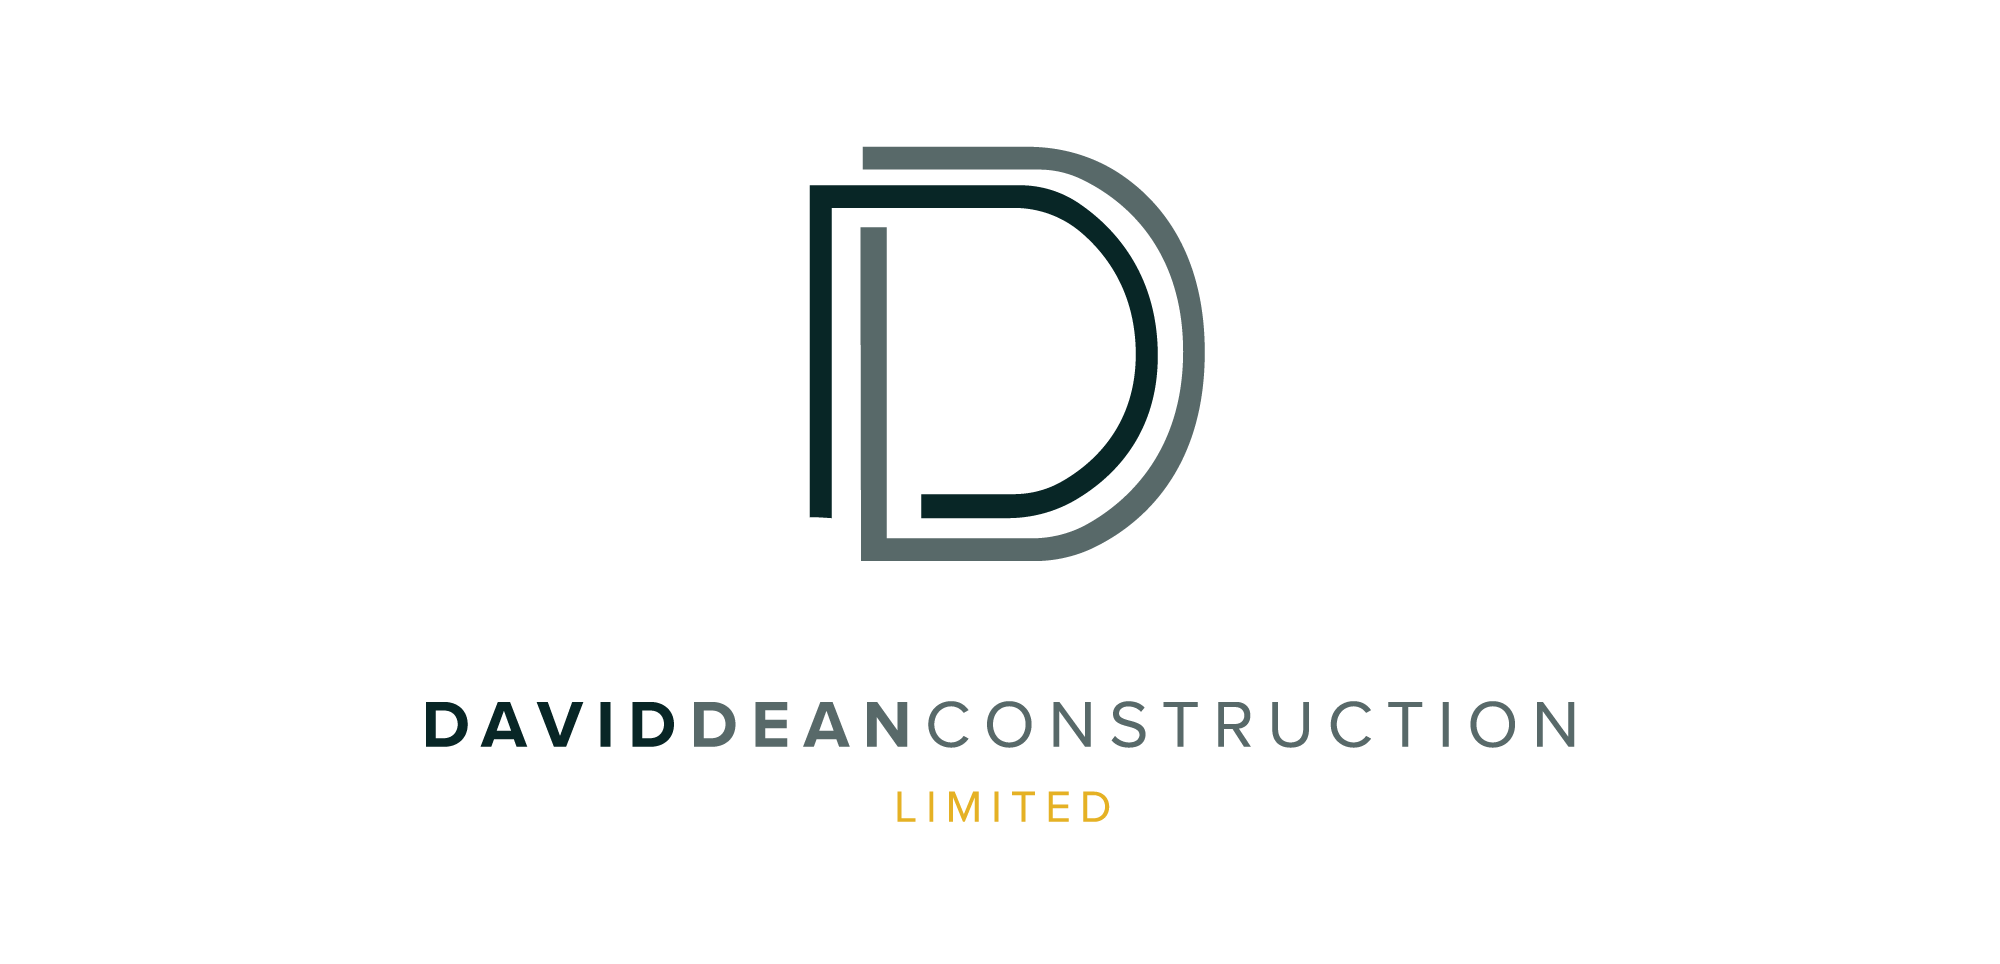 David Dean Construction